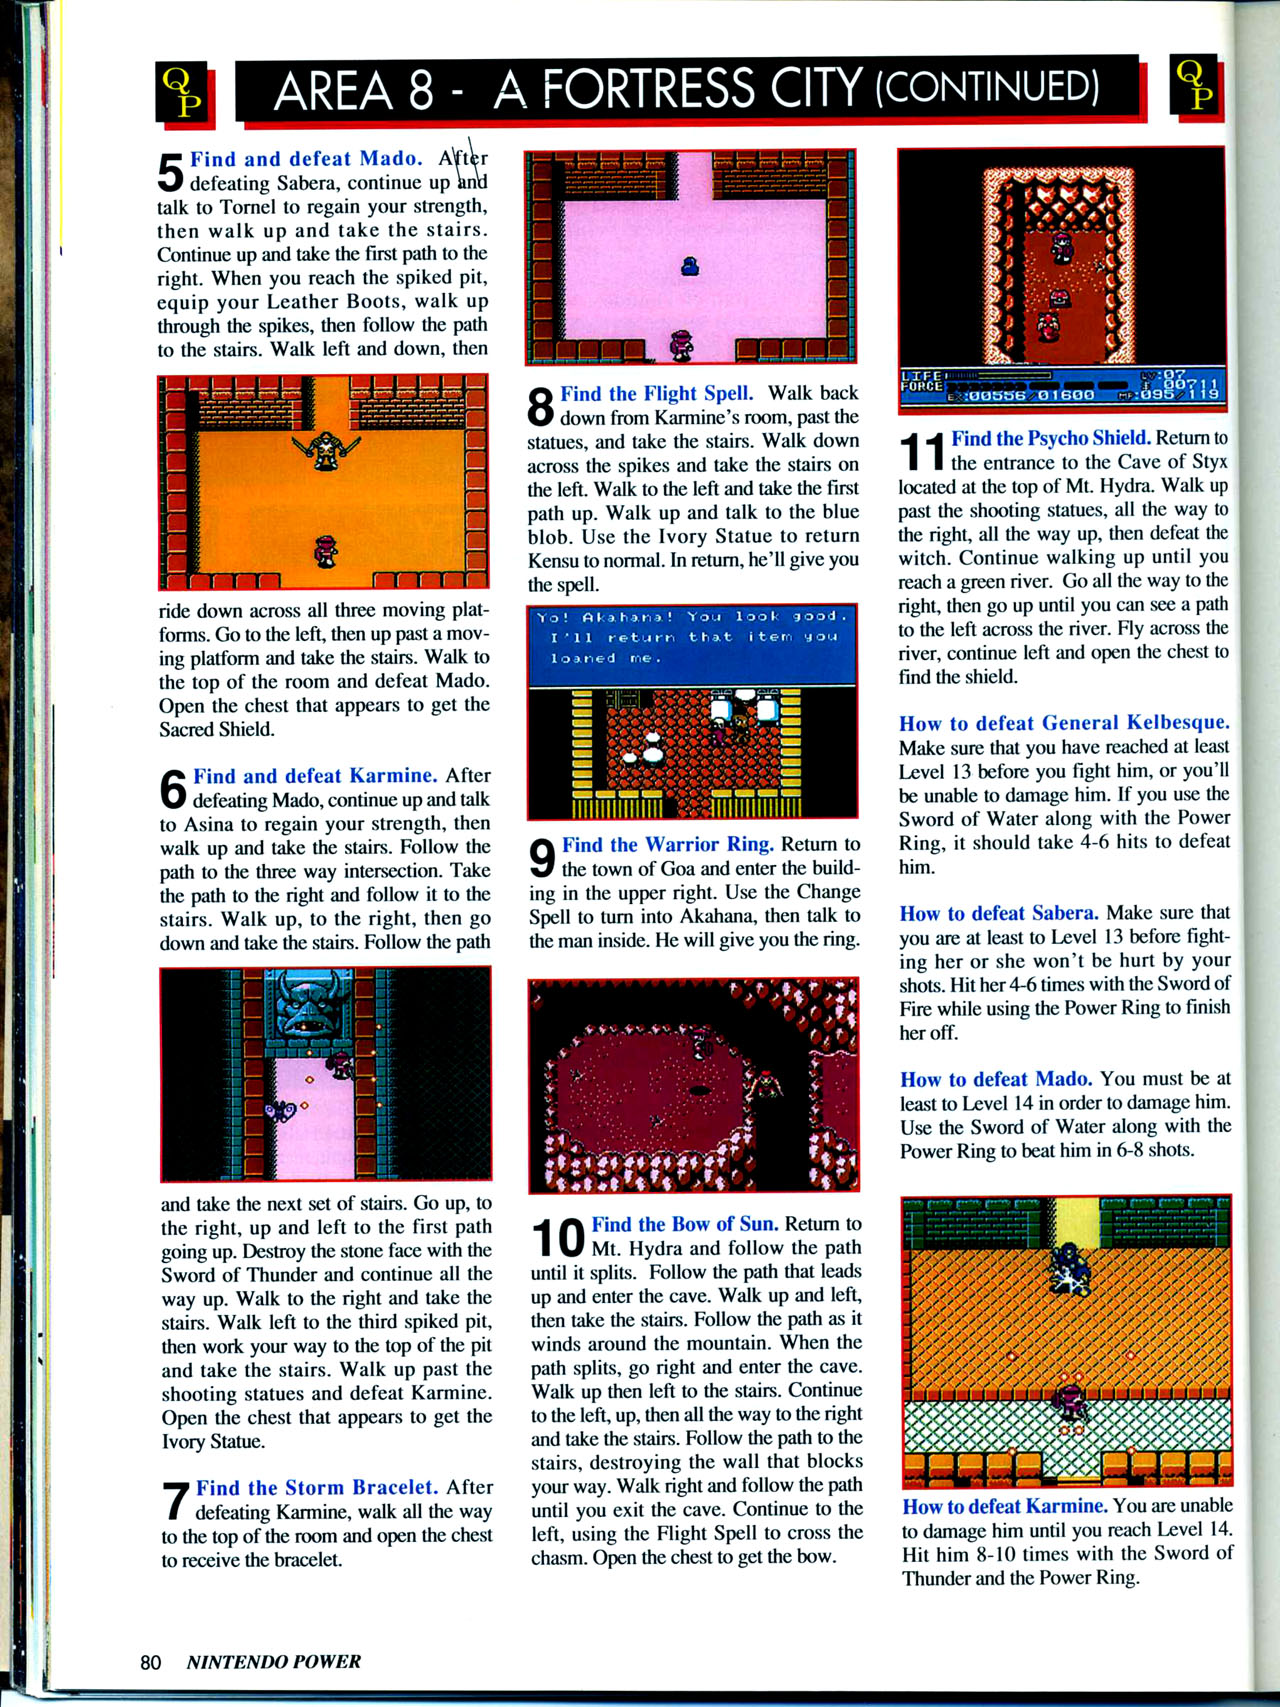 Read online Nintendo Power comic -  Issue #60 - 87